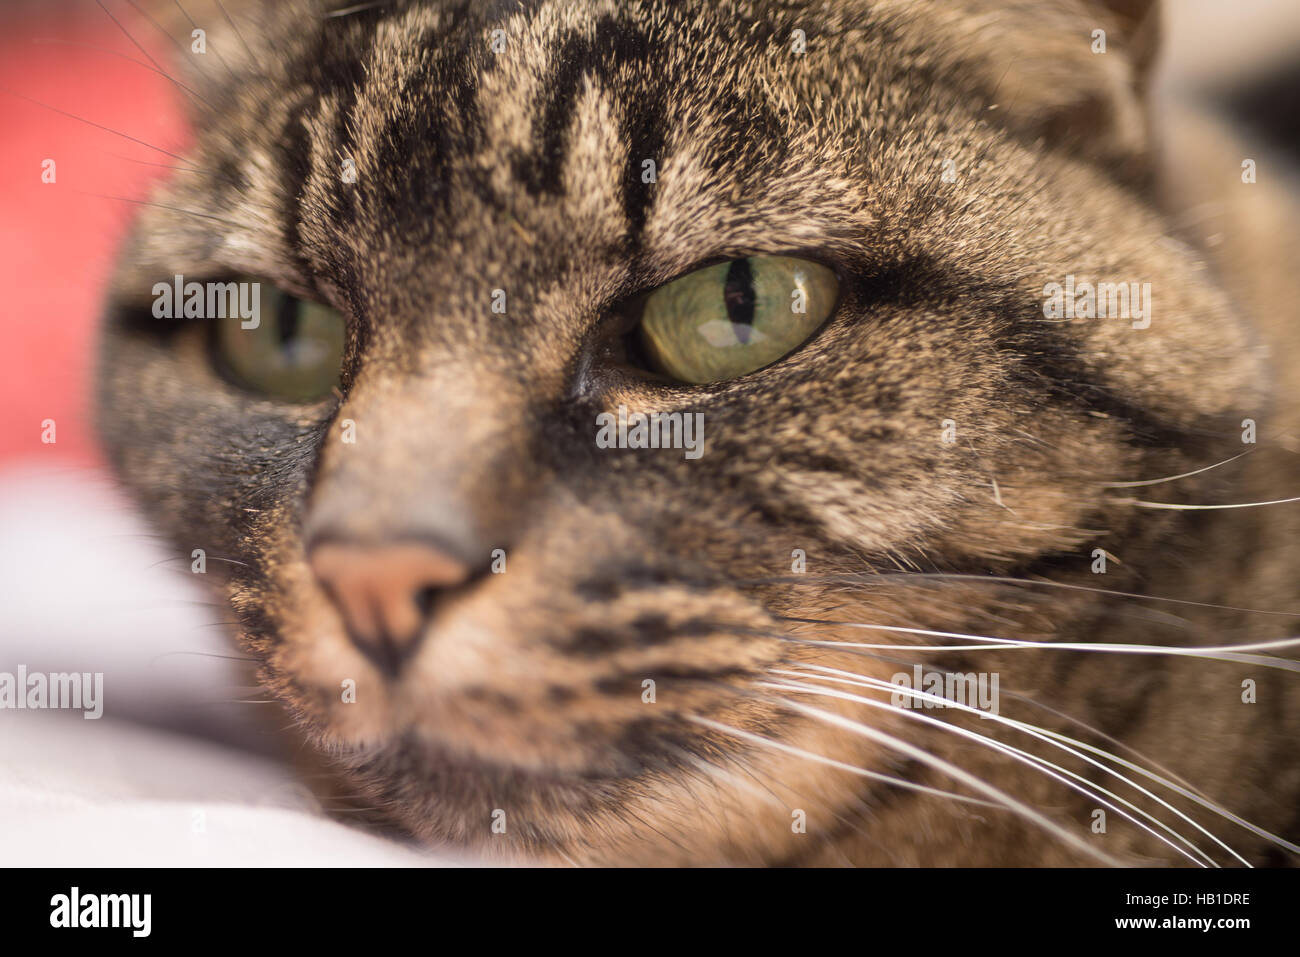 Up close portrait of a cat. Stock Photo